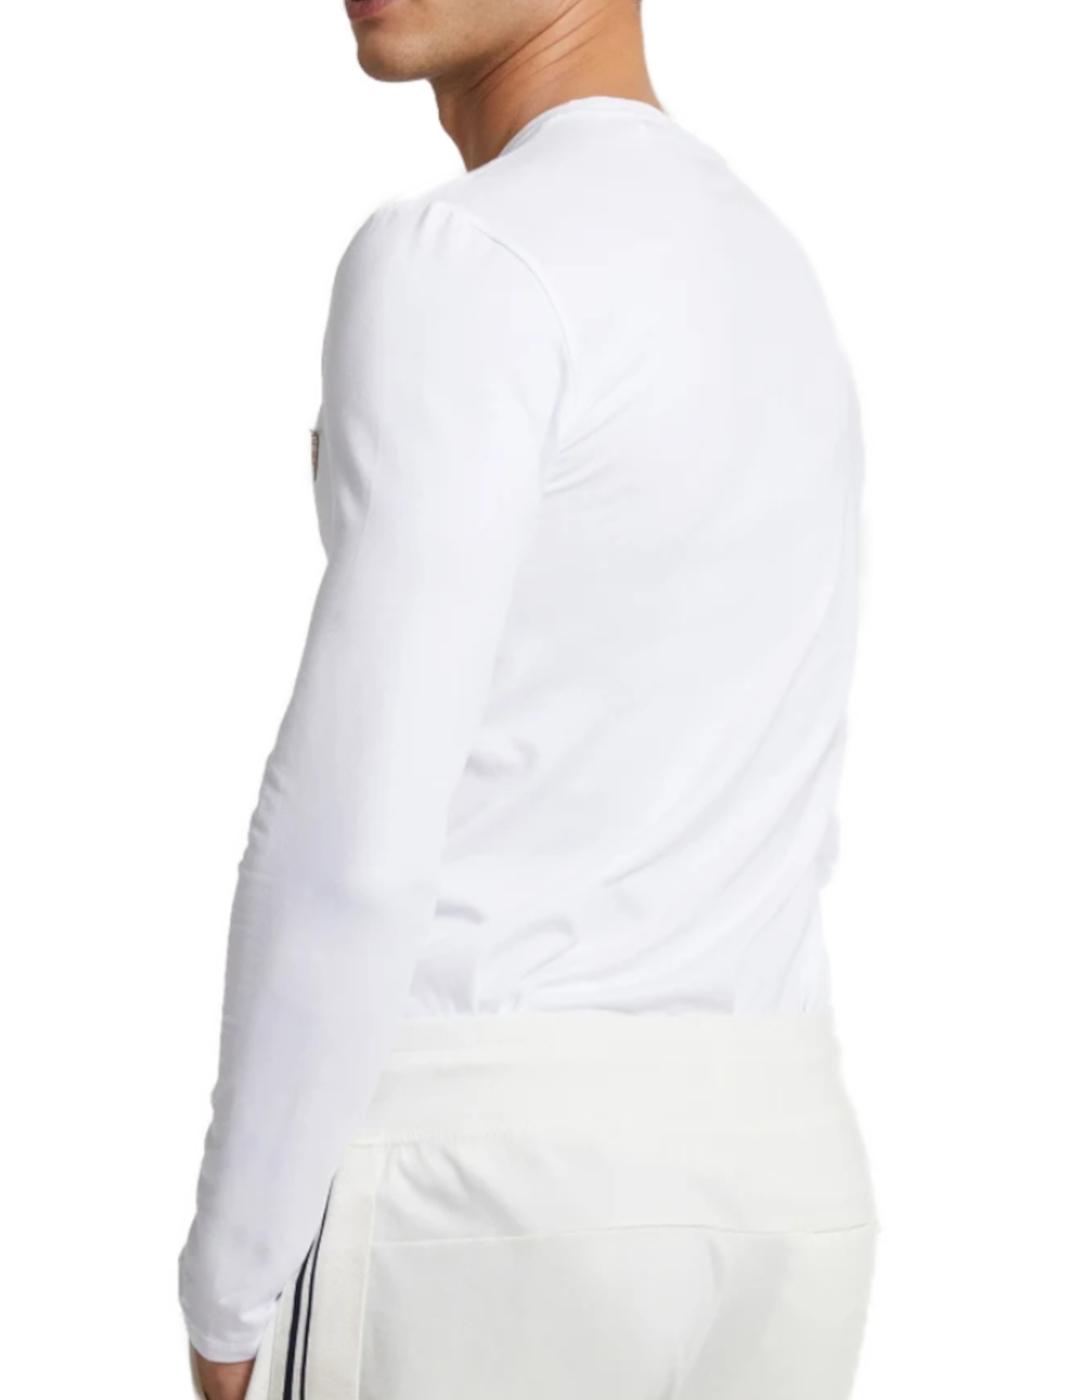 Guess ICON - Camiseta de manga larga - pure white/blanco 